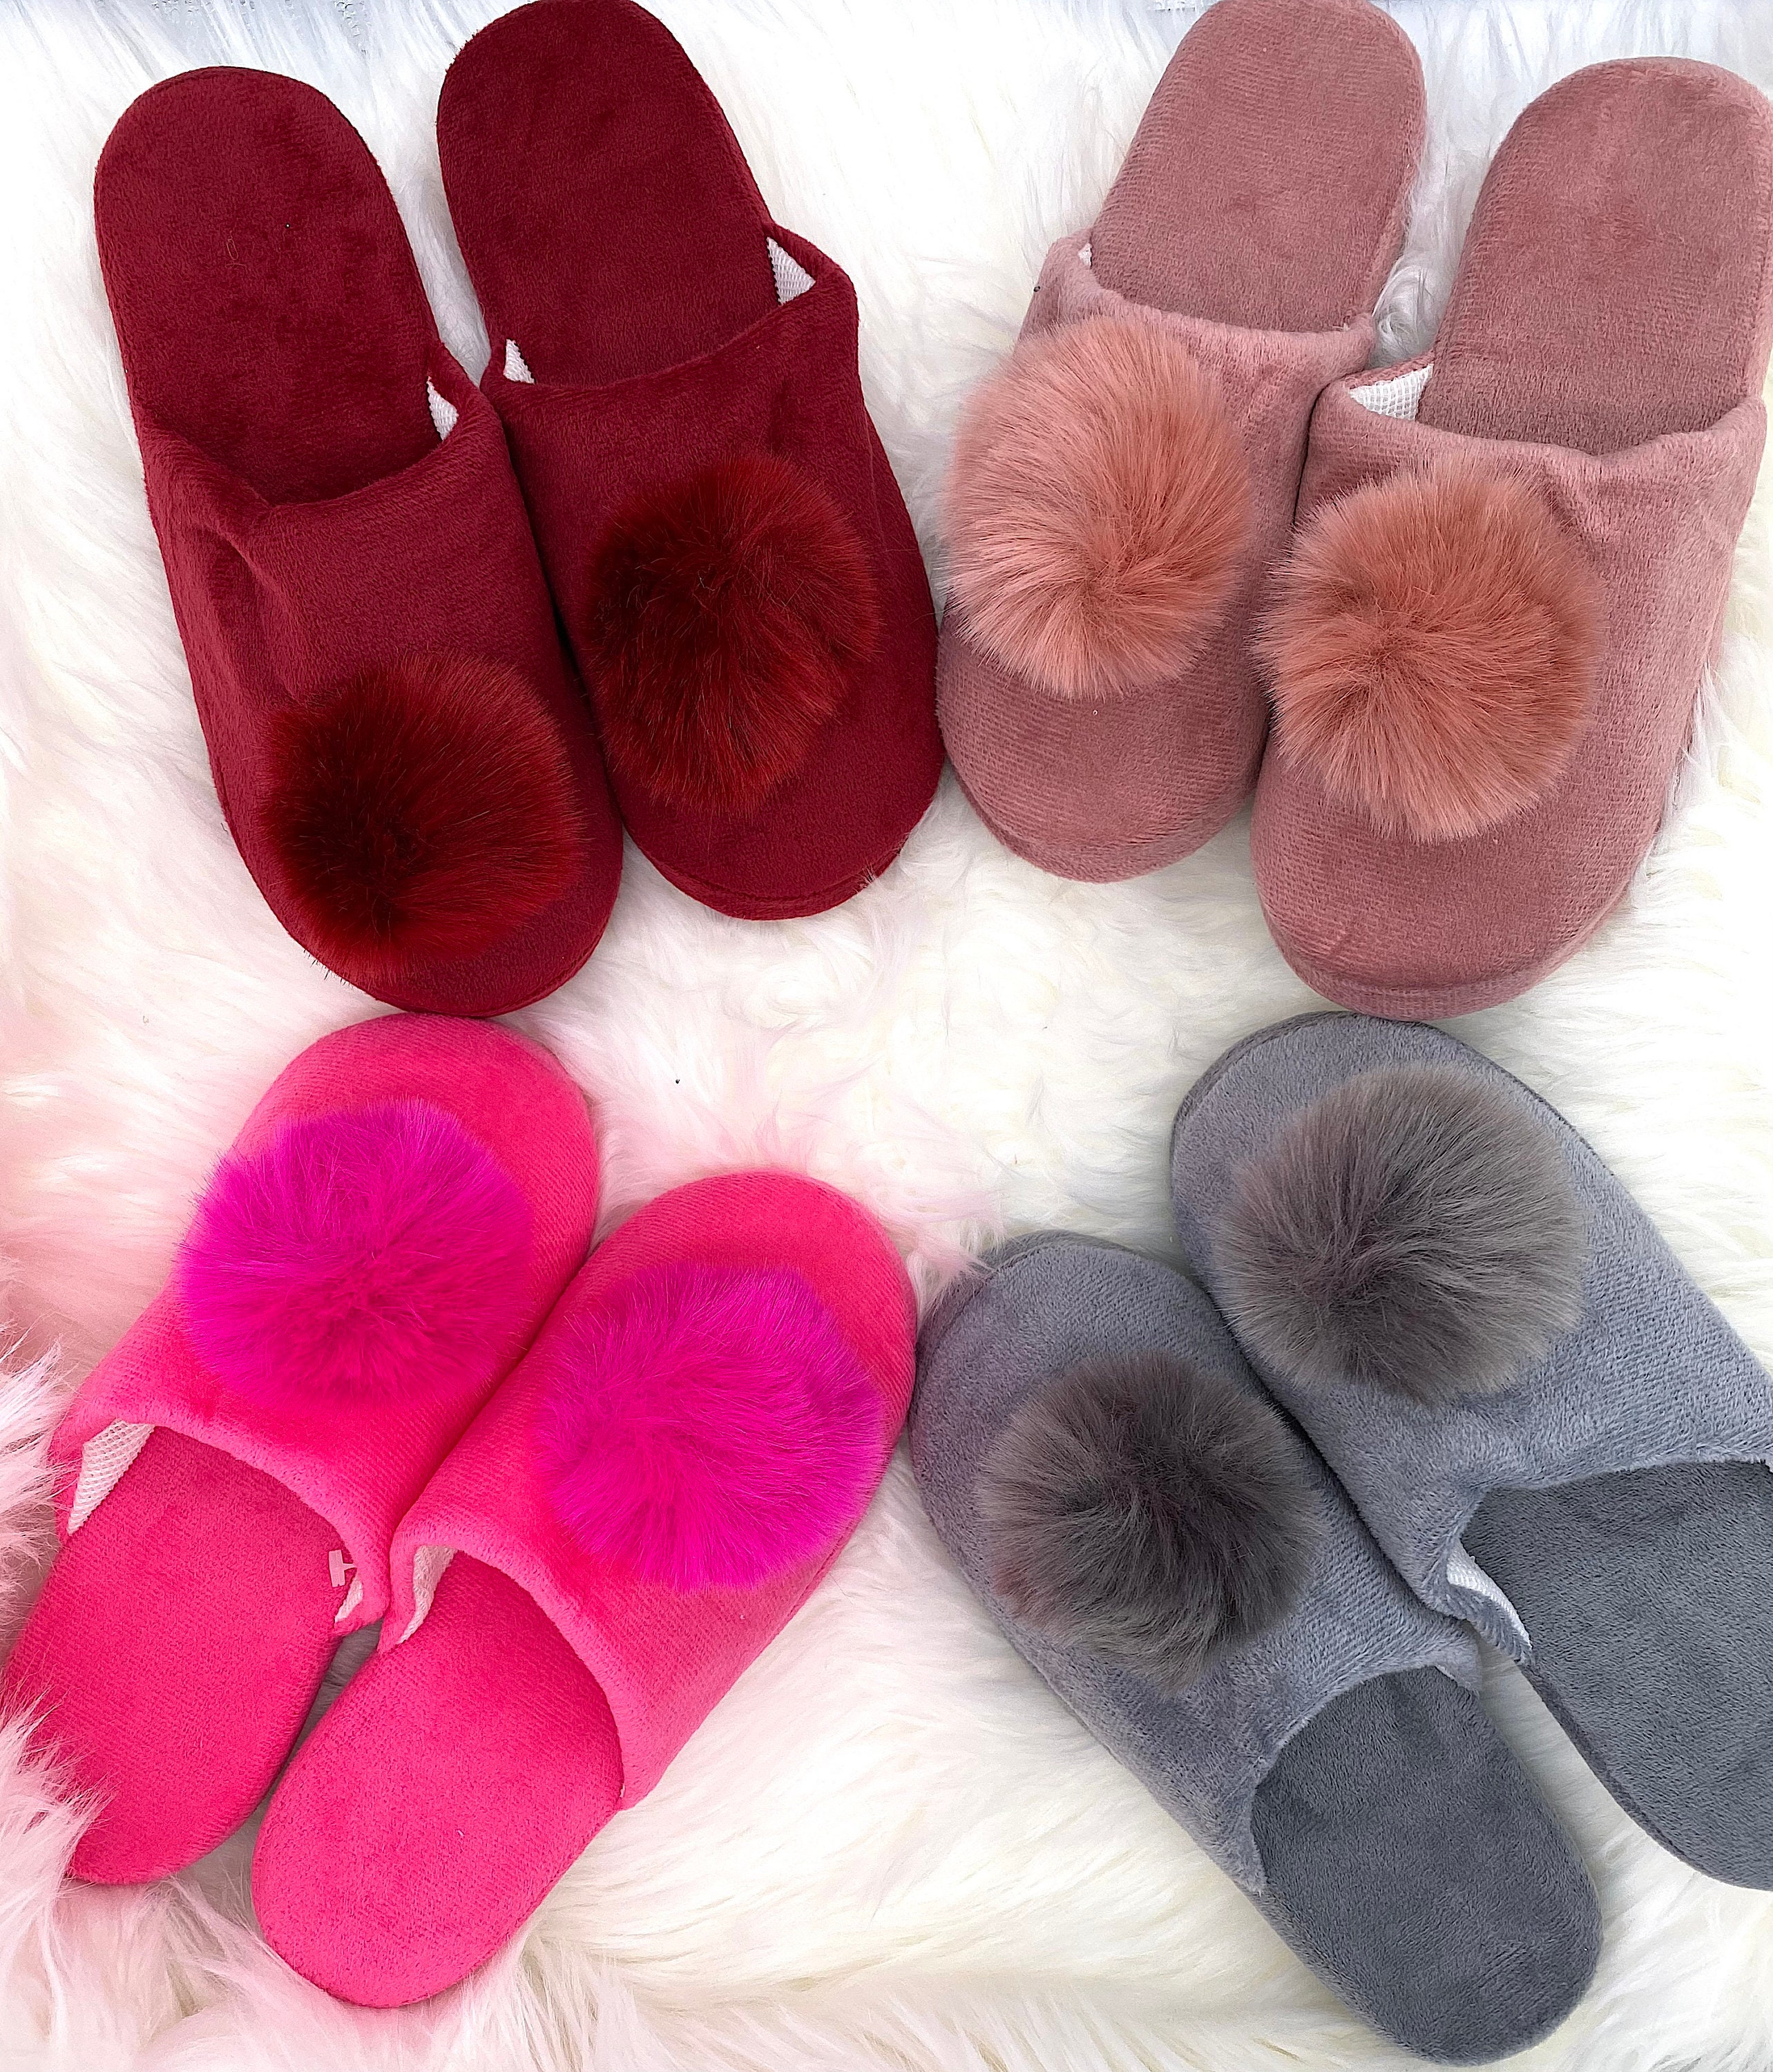 Fluffy Slipper for Women, Faux Fur Feel Fuzzy Slippers, Gifts for